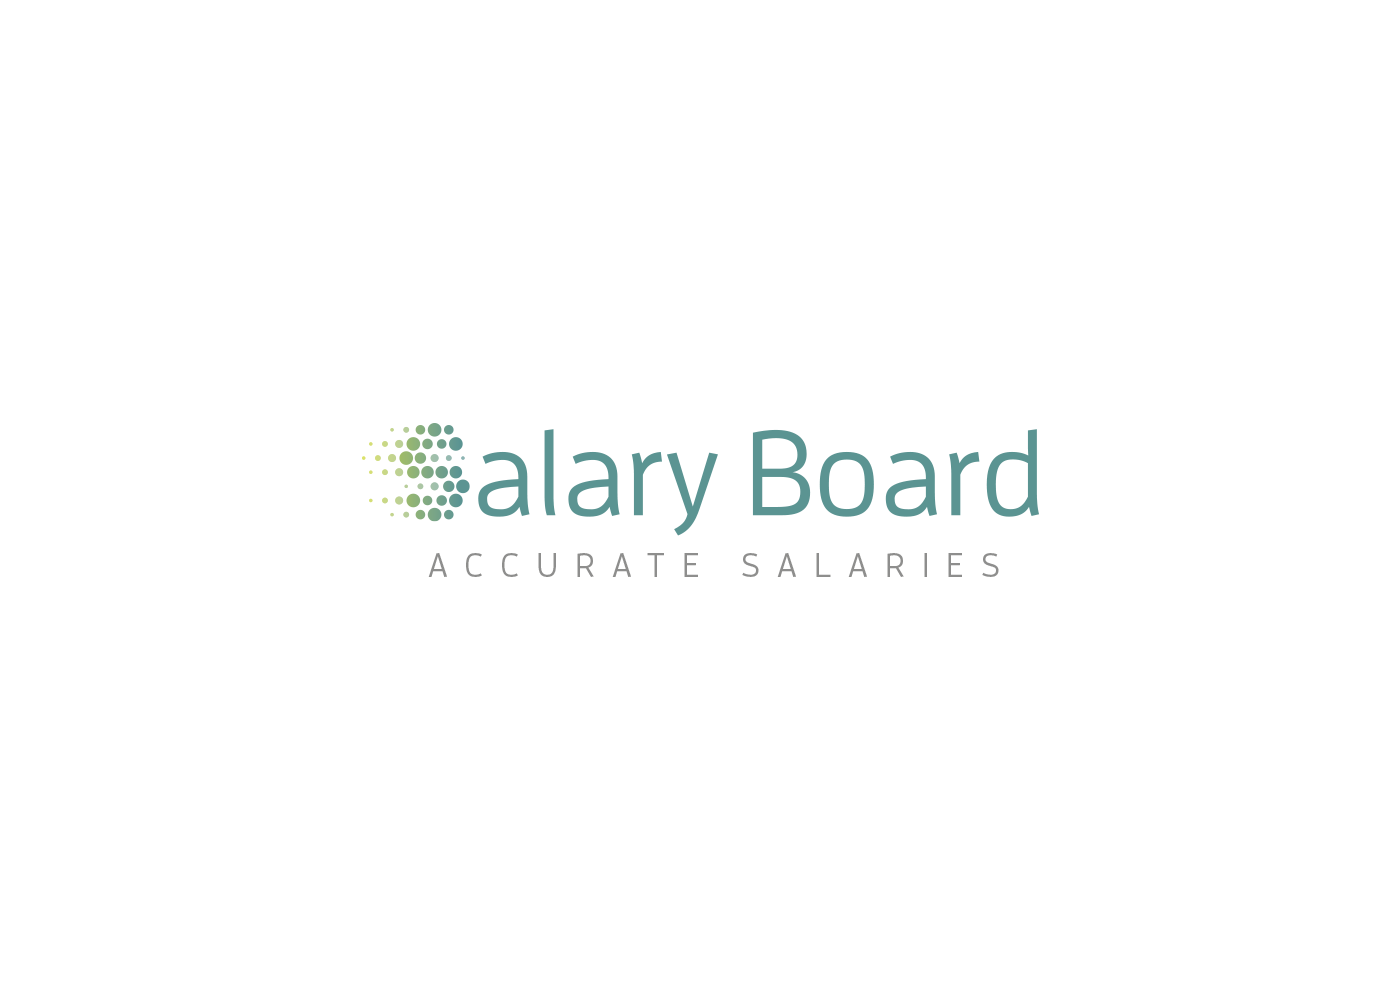 brand Web design salary board singapore